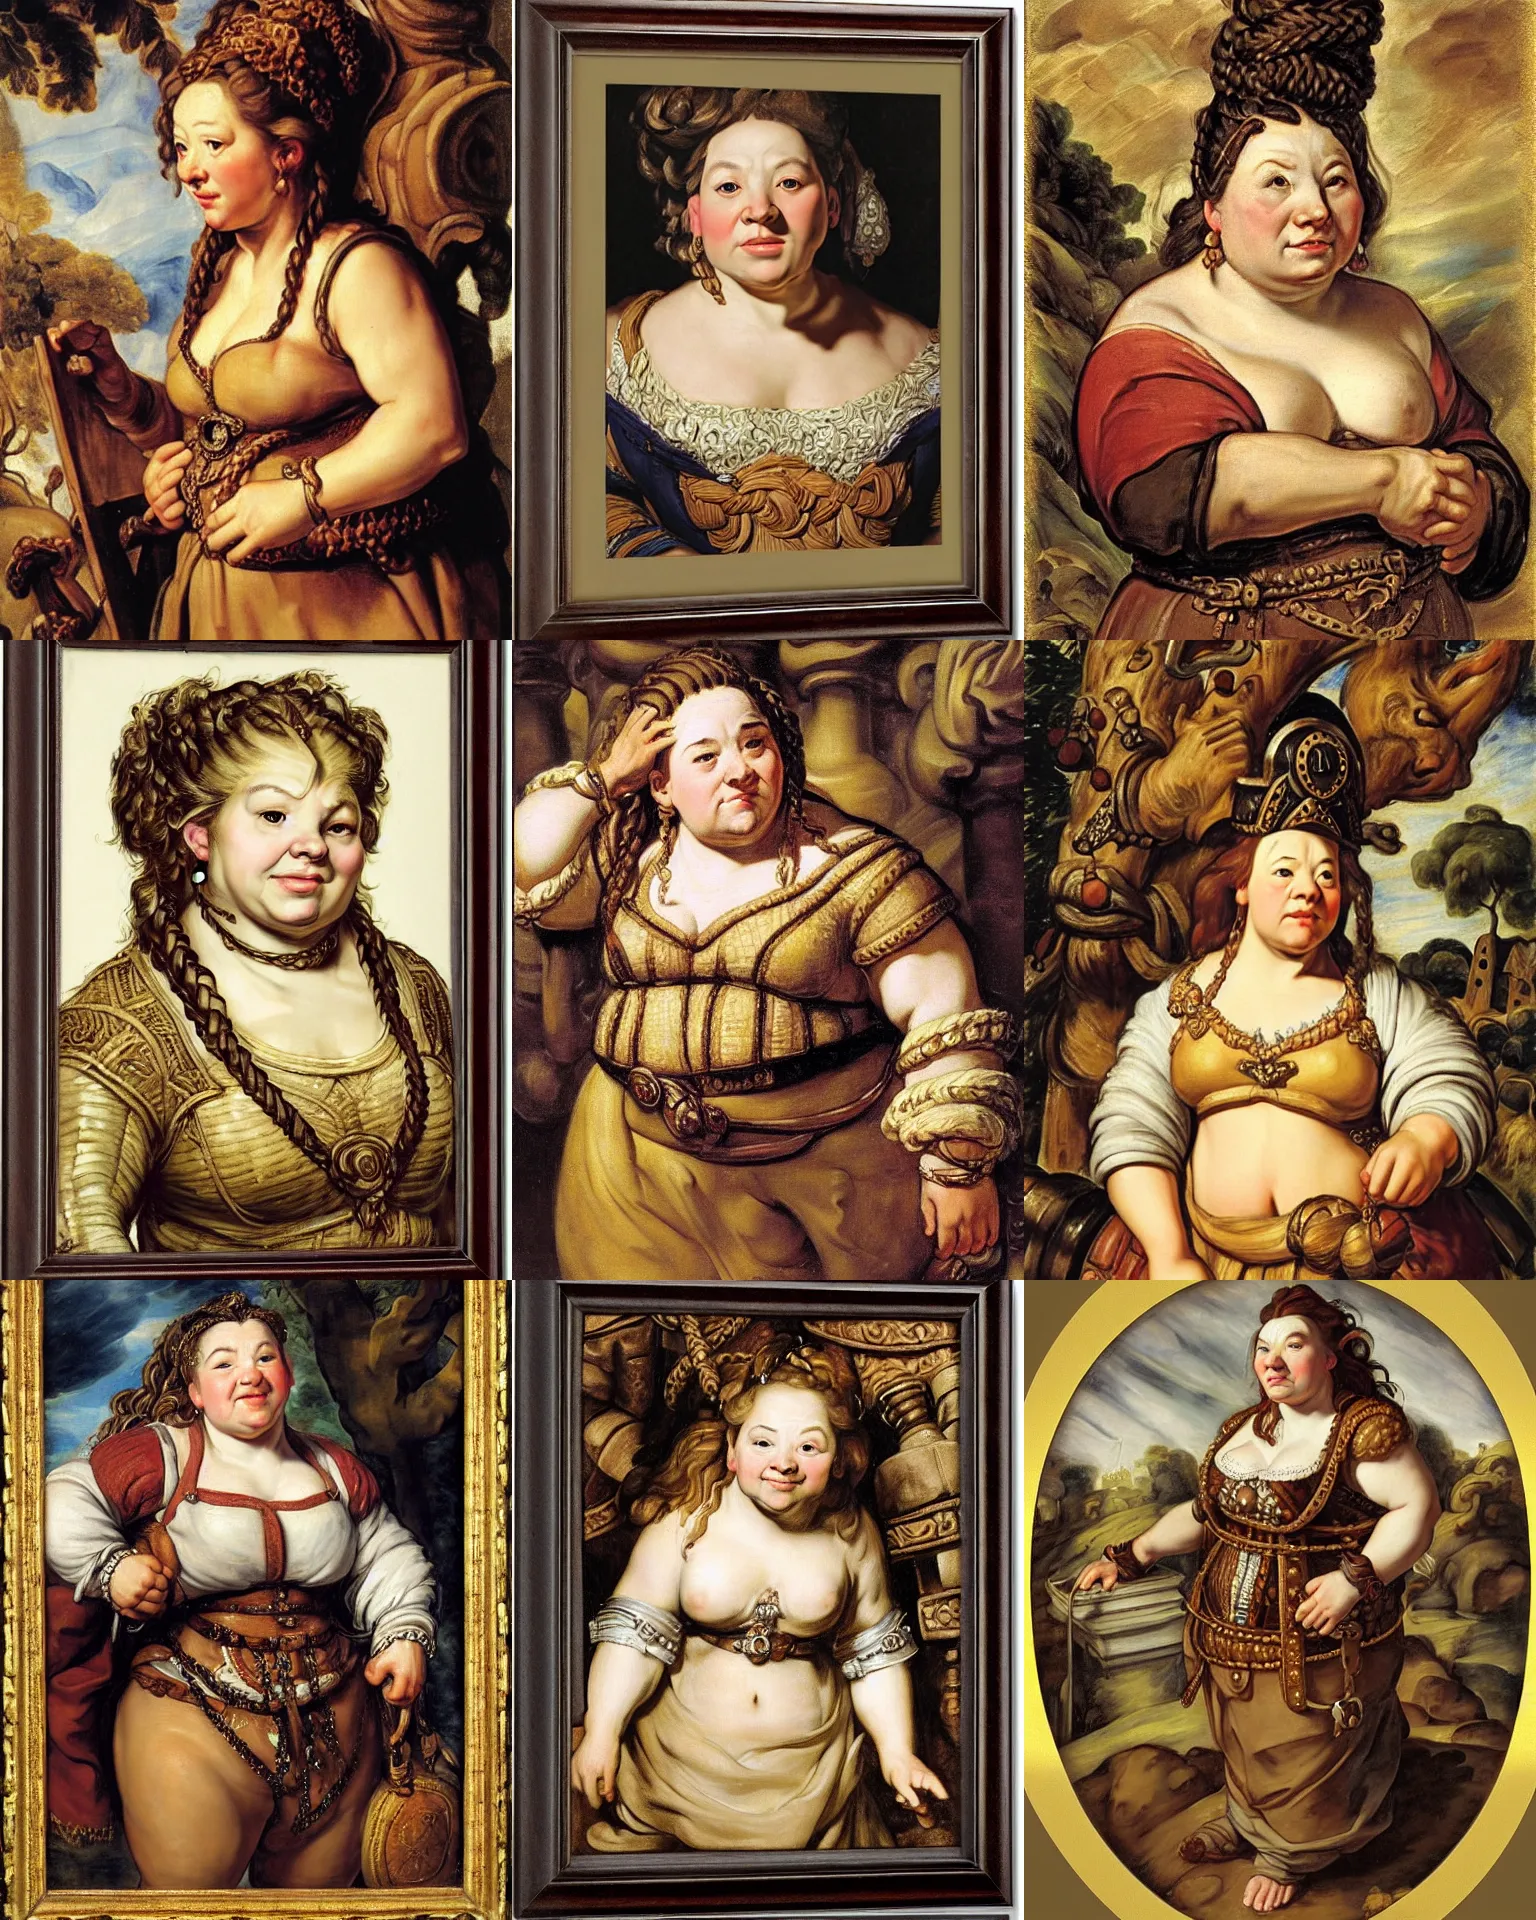 Prompt: female dwarven noblewoman, chubby short stature, braided intricate hair, by jacob jordaens